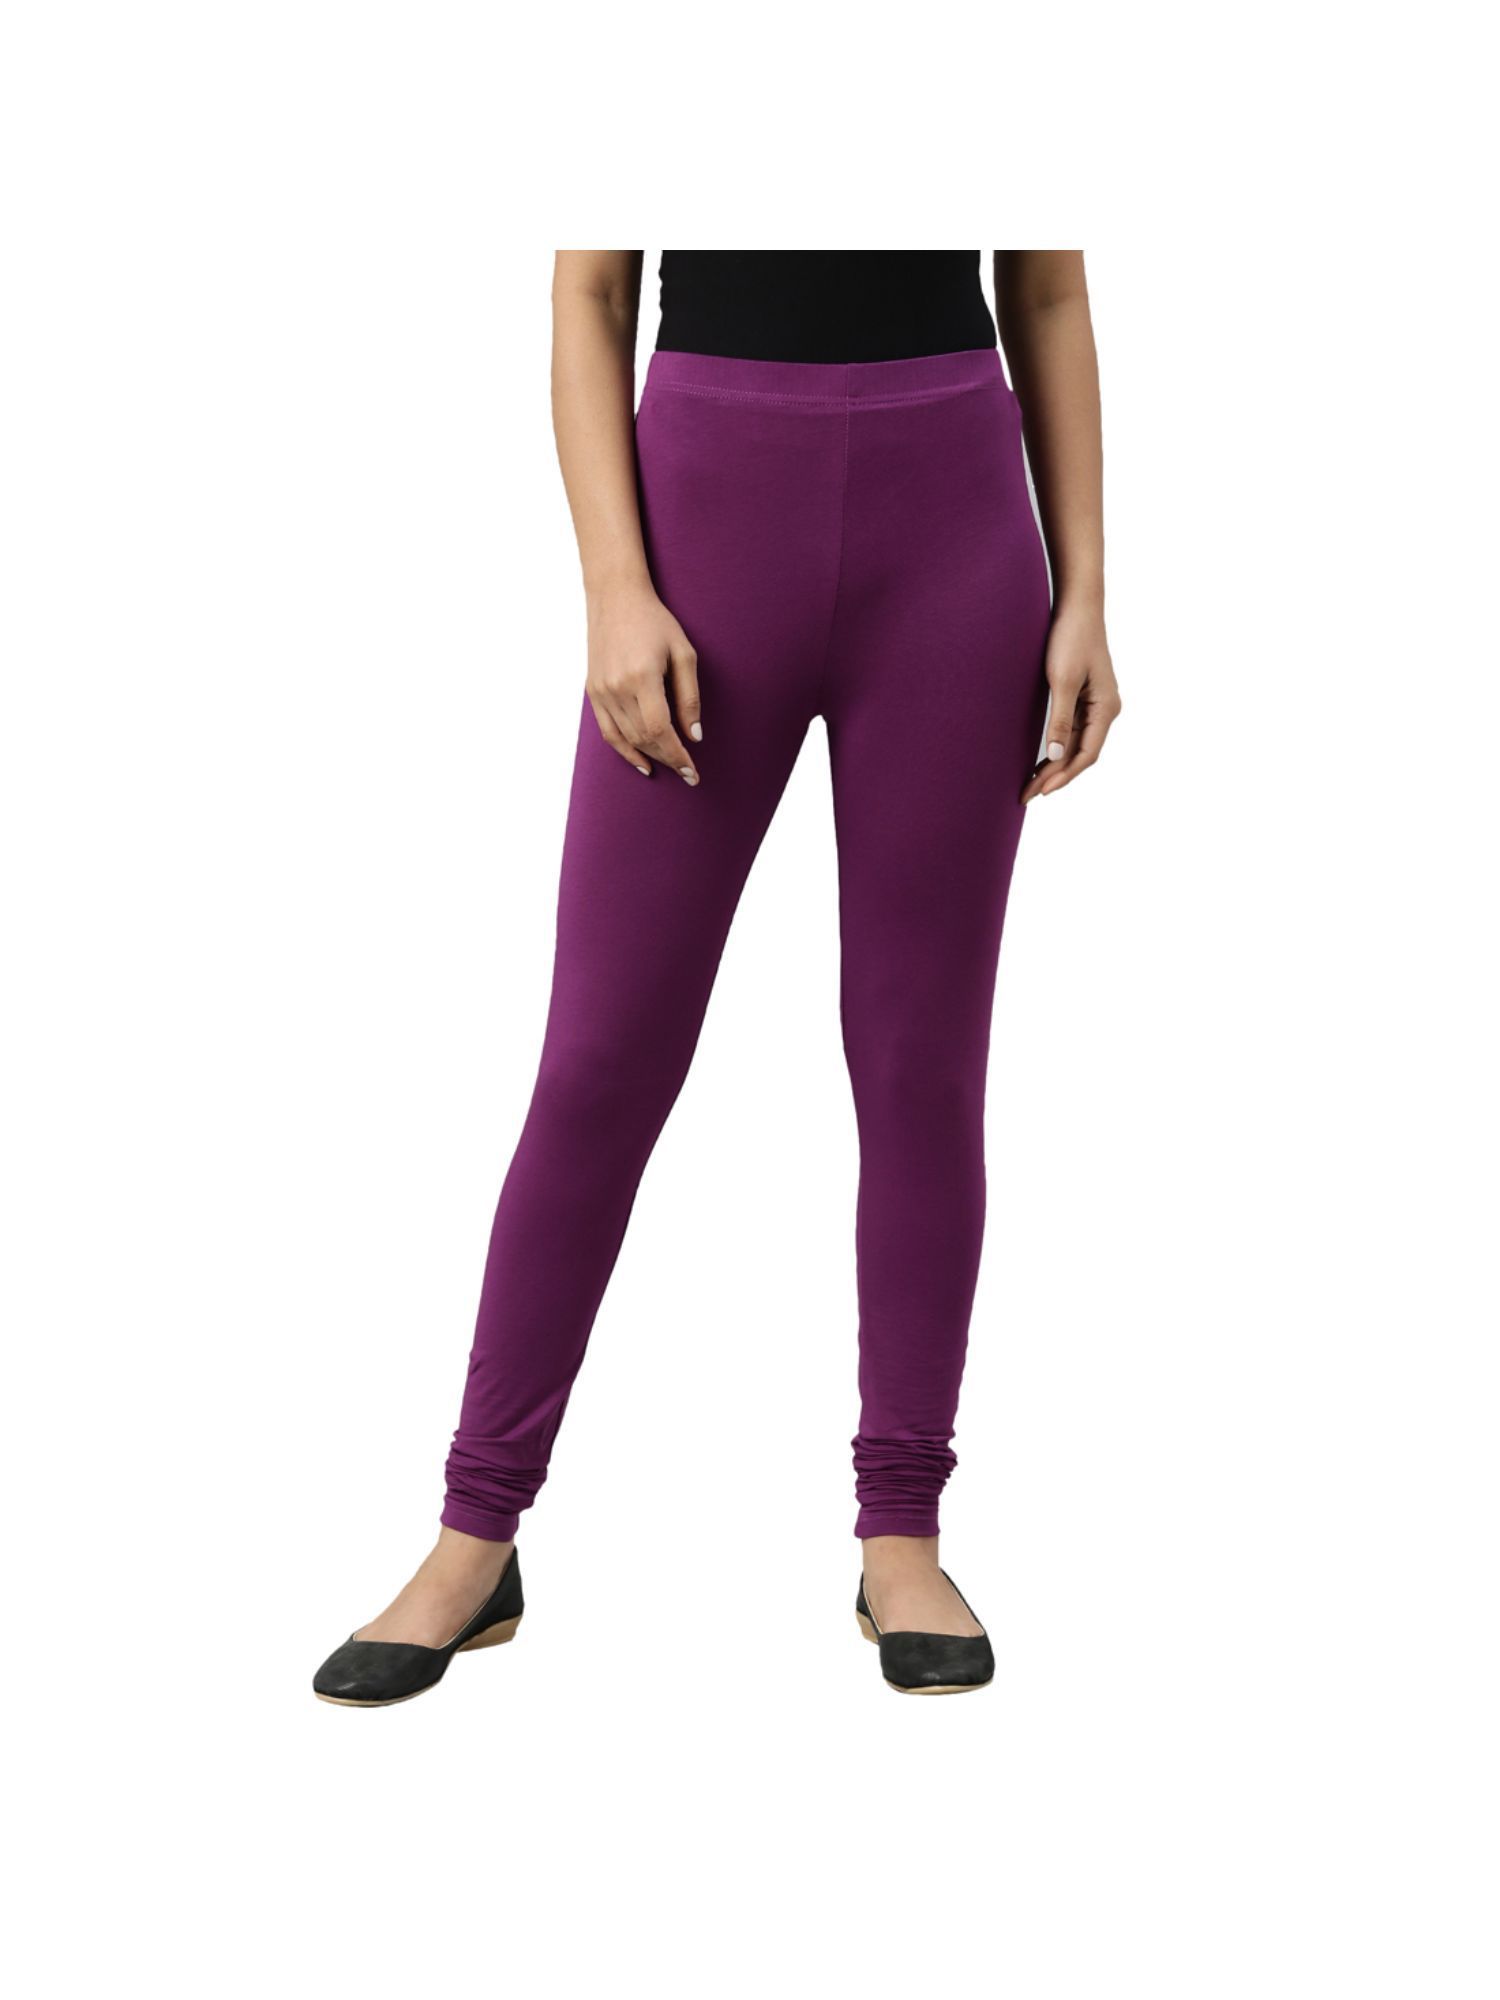 SOLD OUT Skims lace pointelle leggings size 3X NWT lavender purple XXXL |  eBay